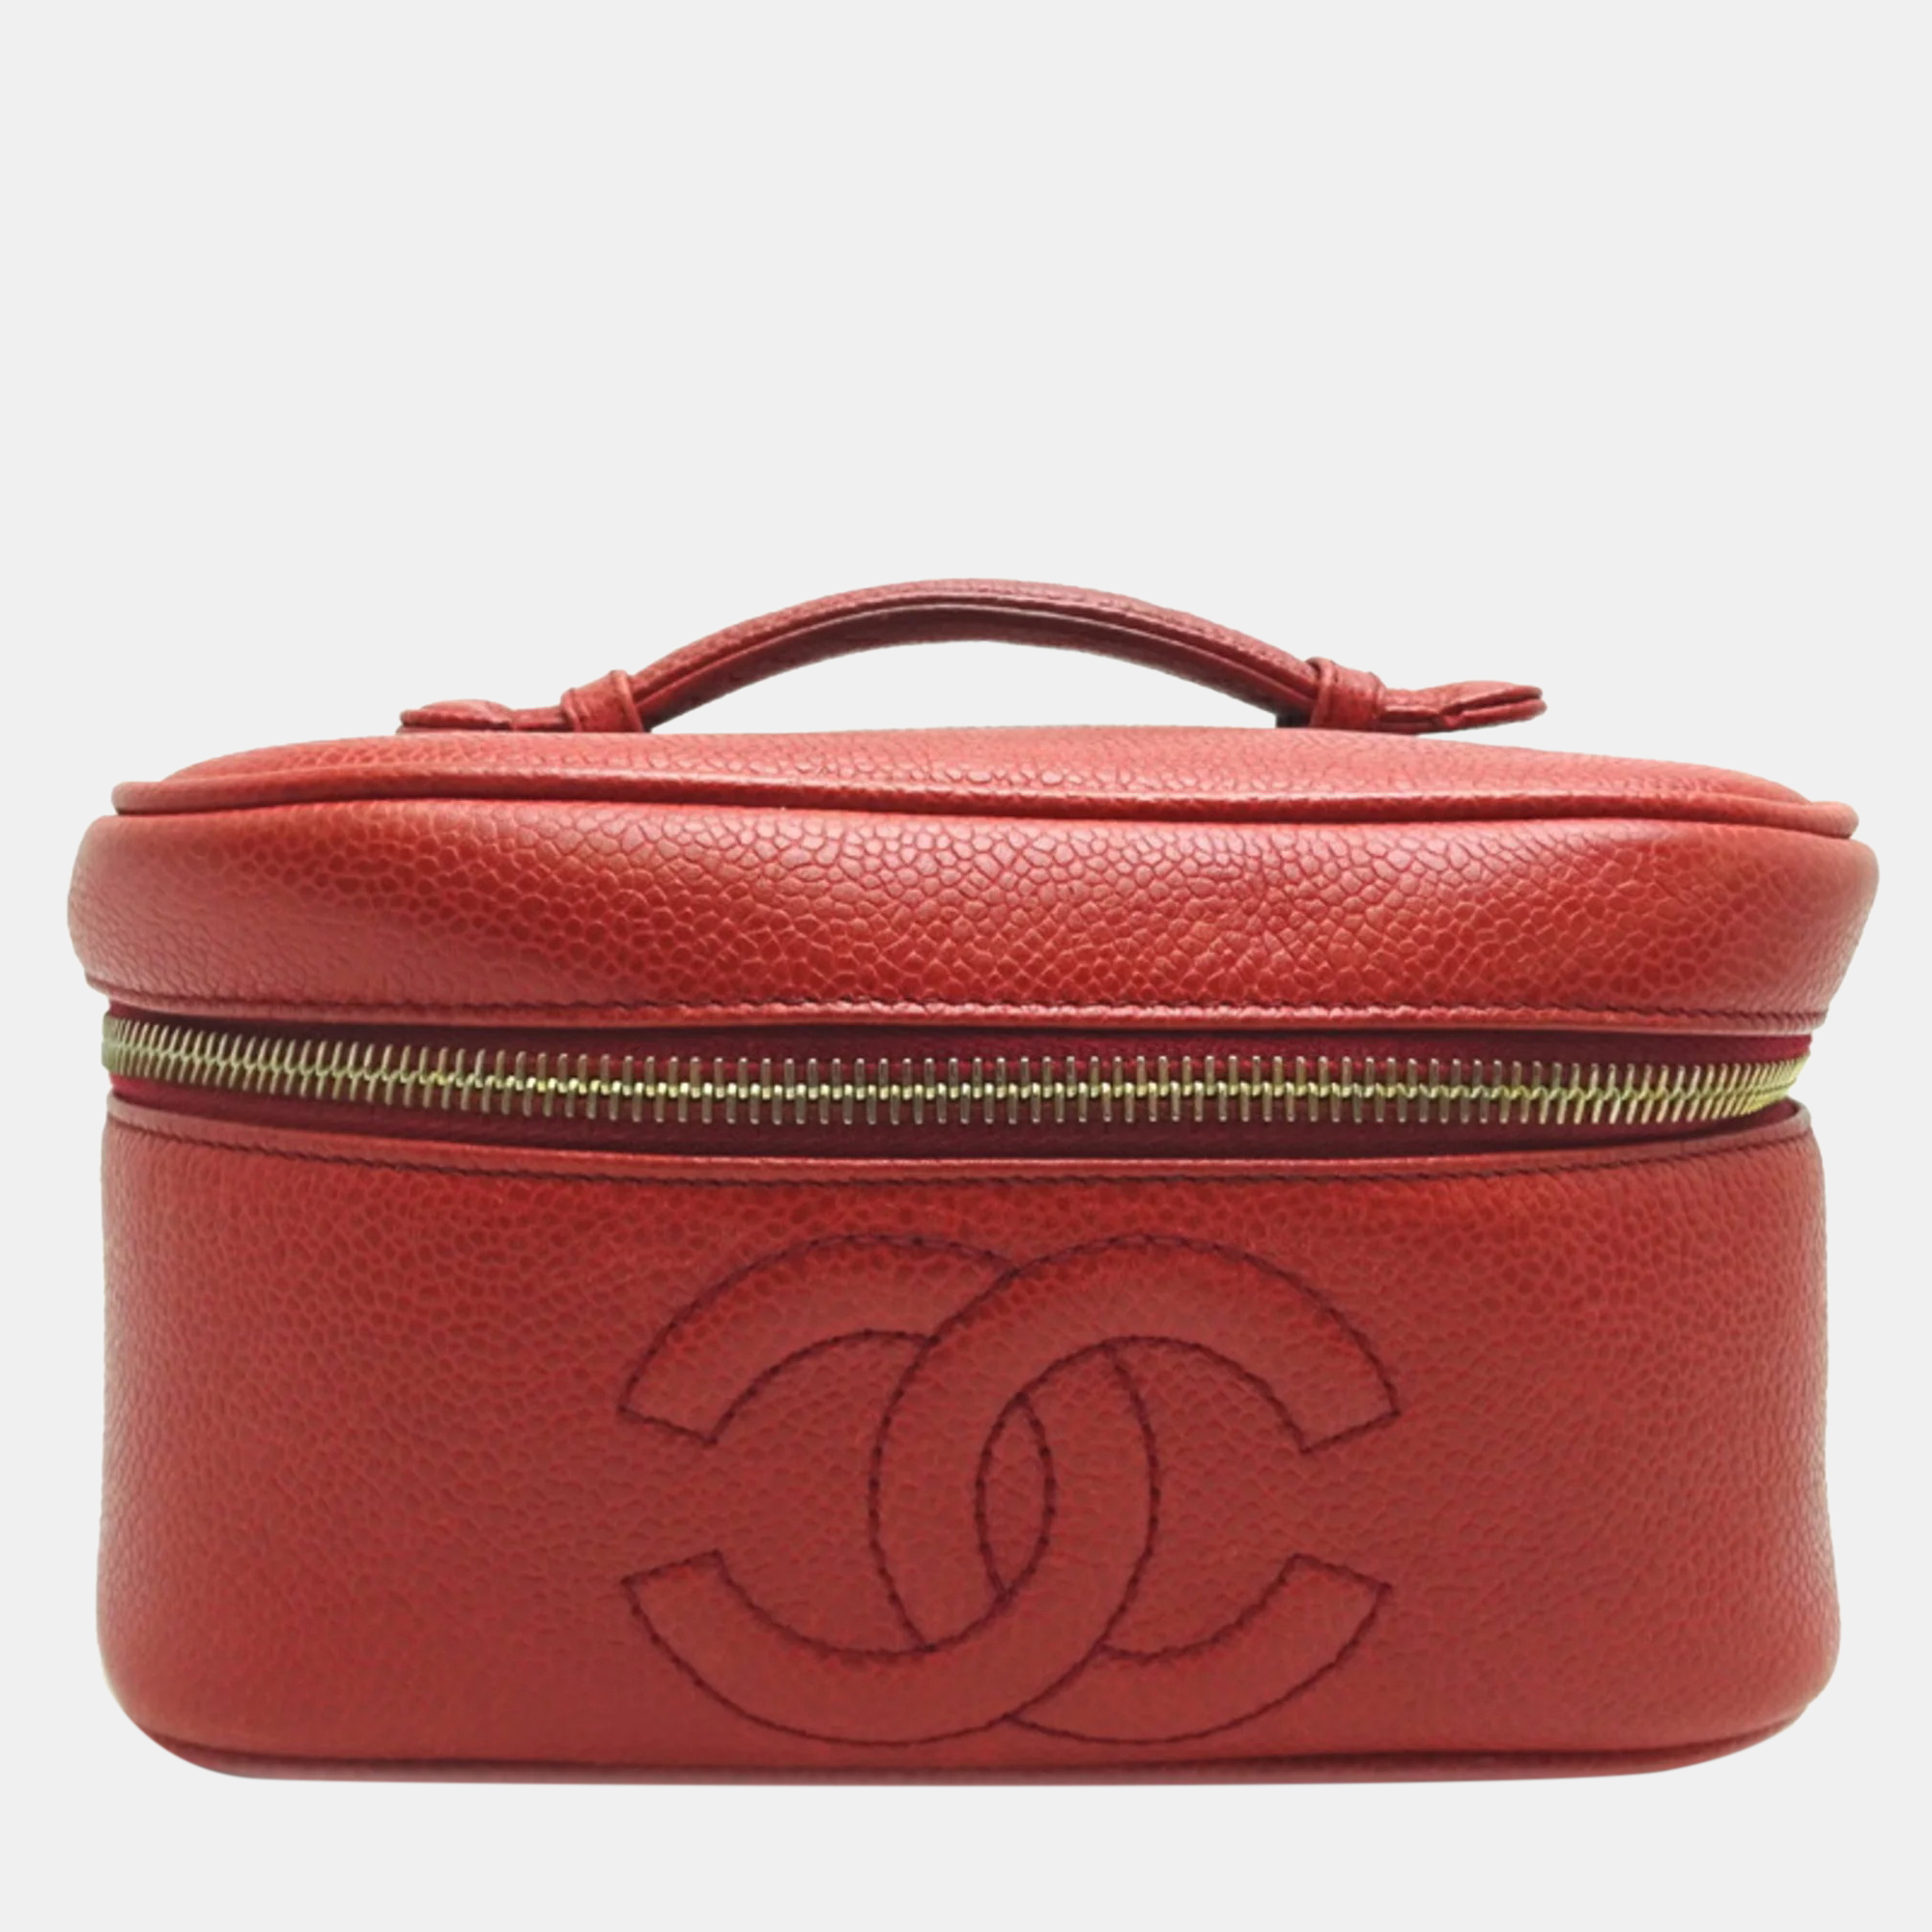 Chanel caviar skin red vanity case ladies handbag